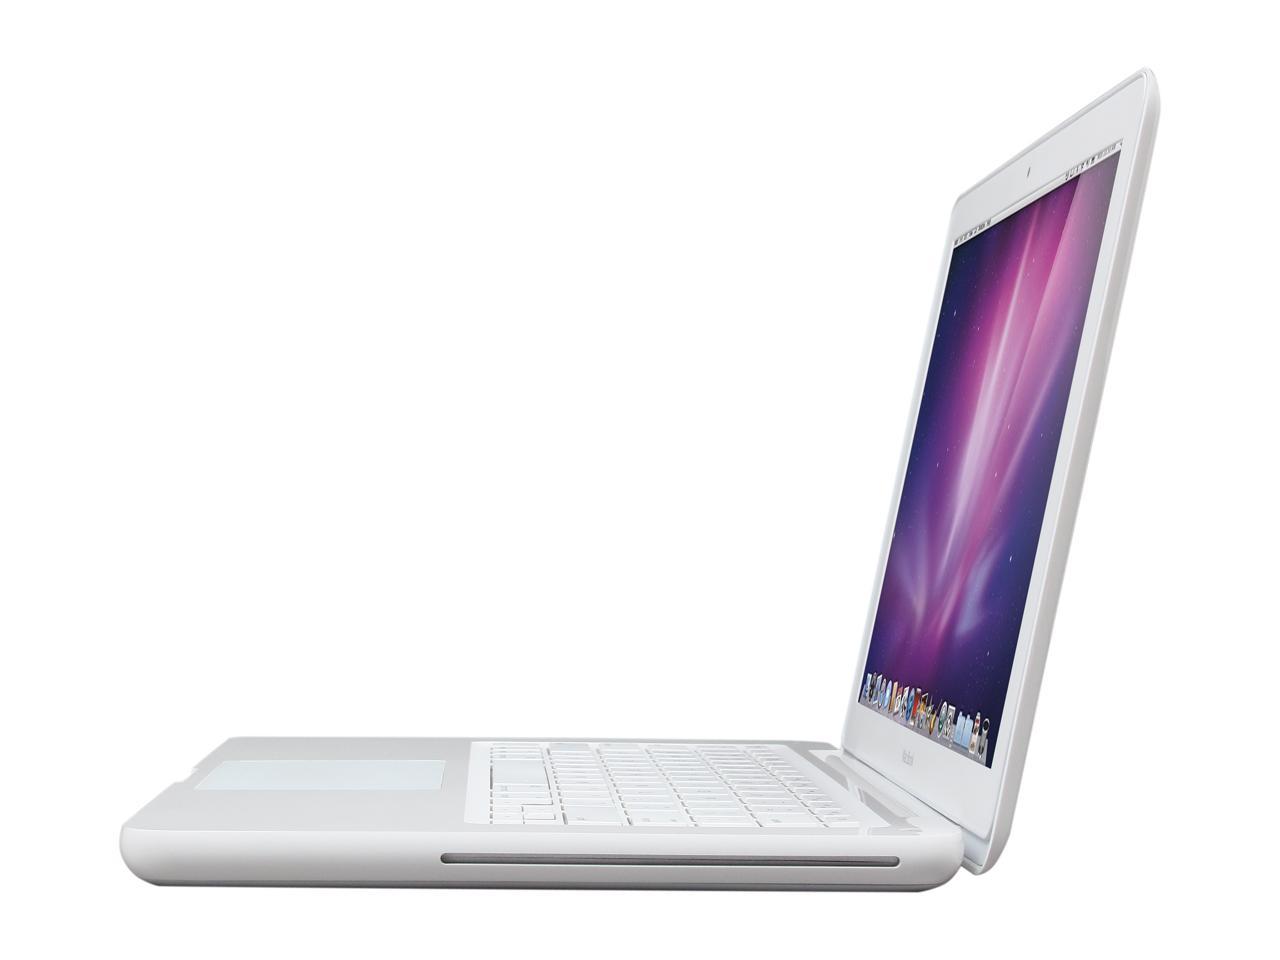 apple-mid-2010-13.3-inch-macbook-a1342-white-c2d - 2.4ghz processor, 4gb ram, 320m - 256mb gpu-mc516ll/a-2